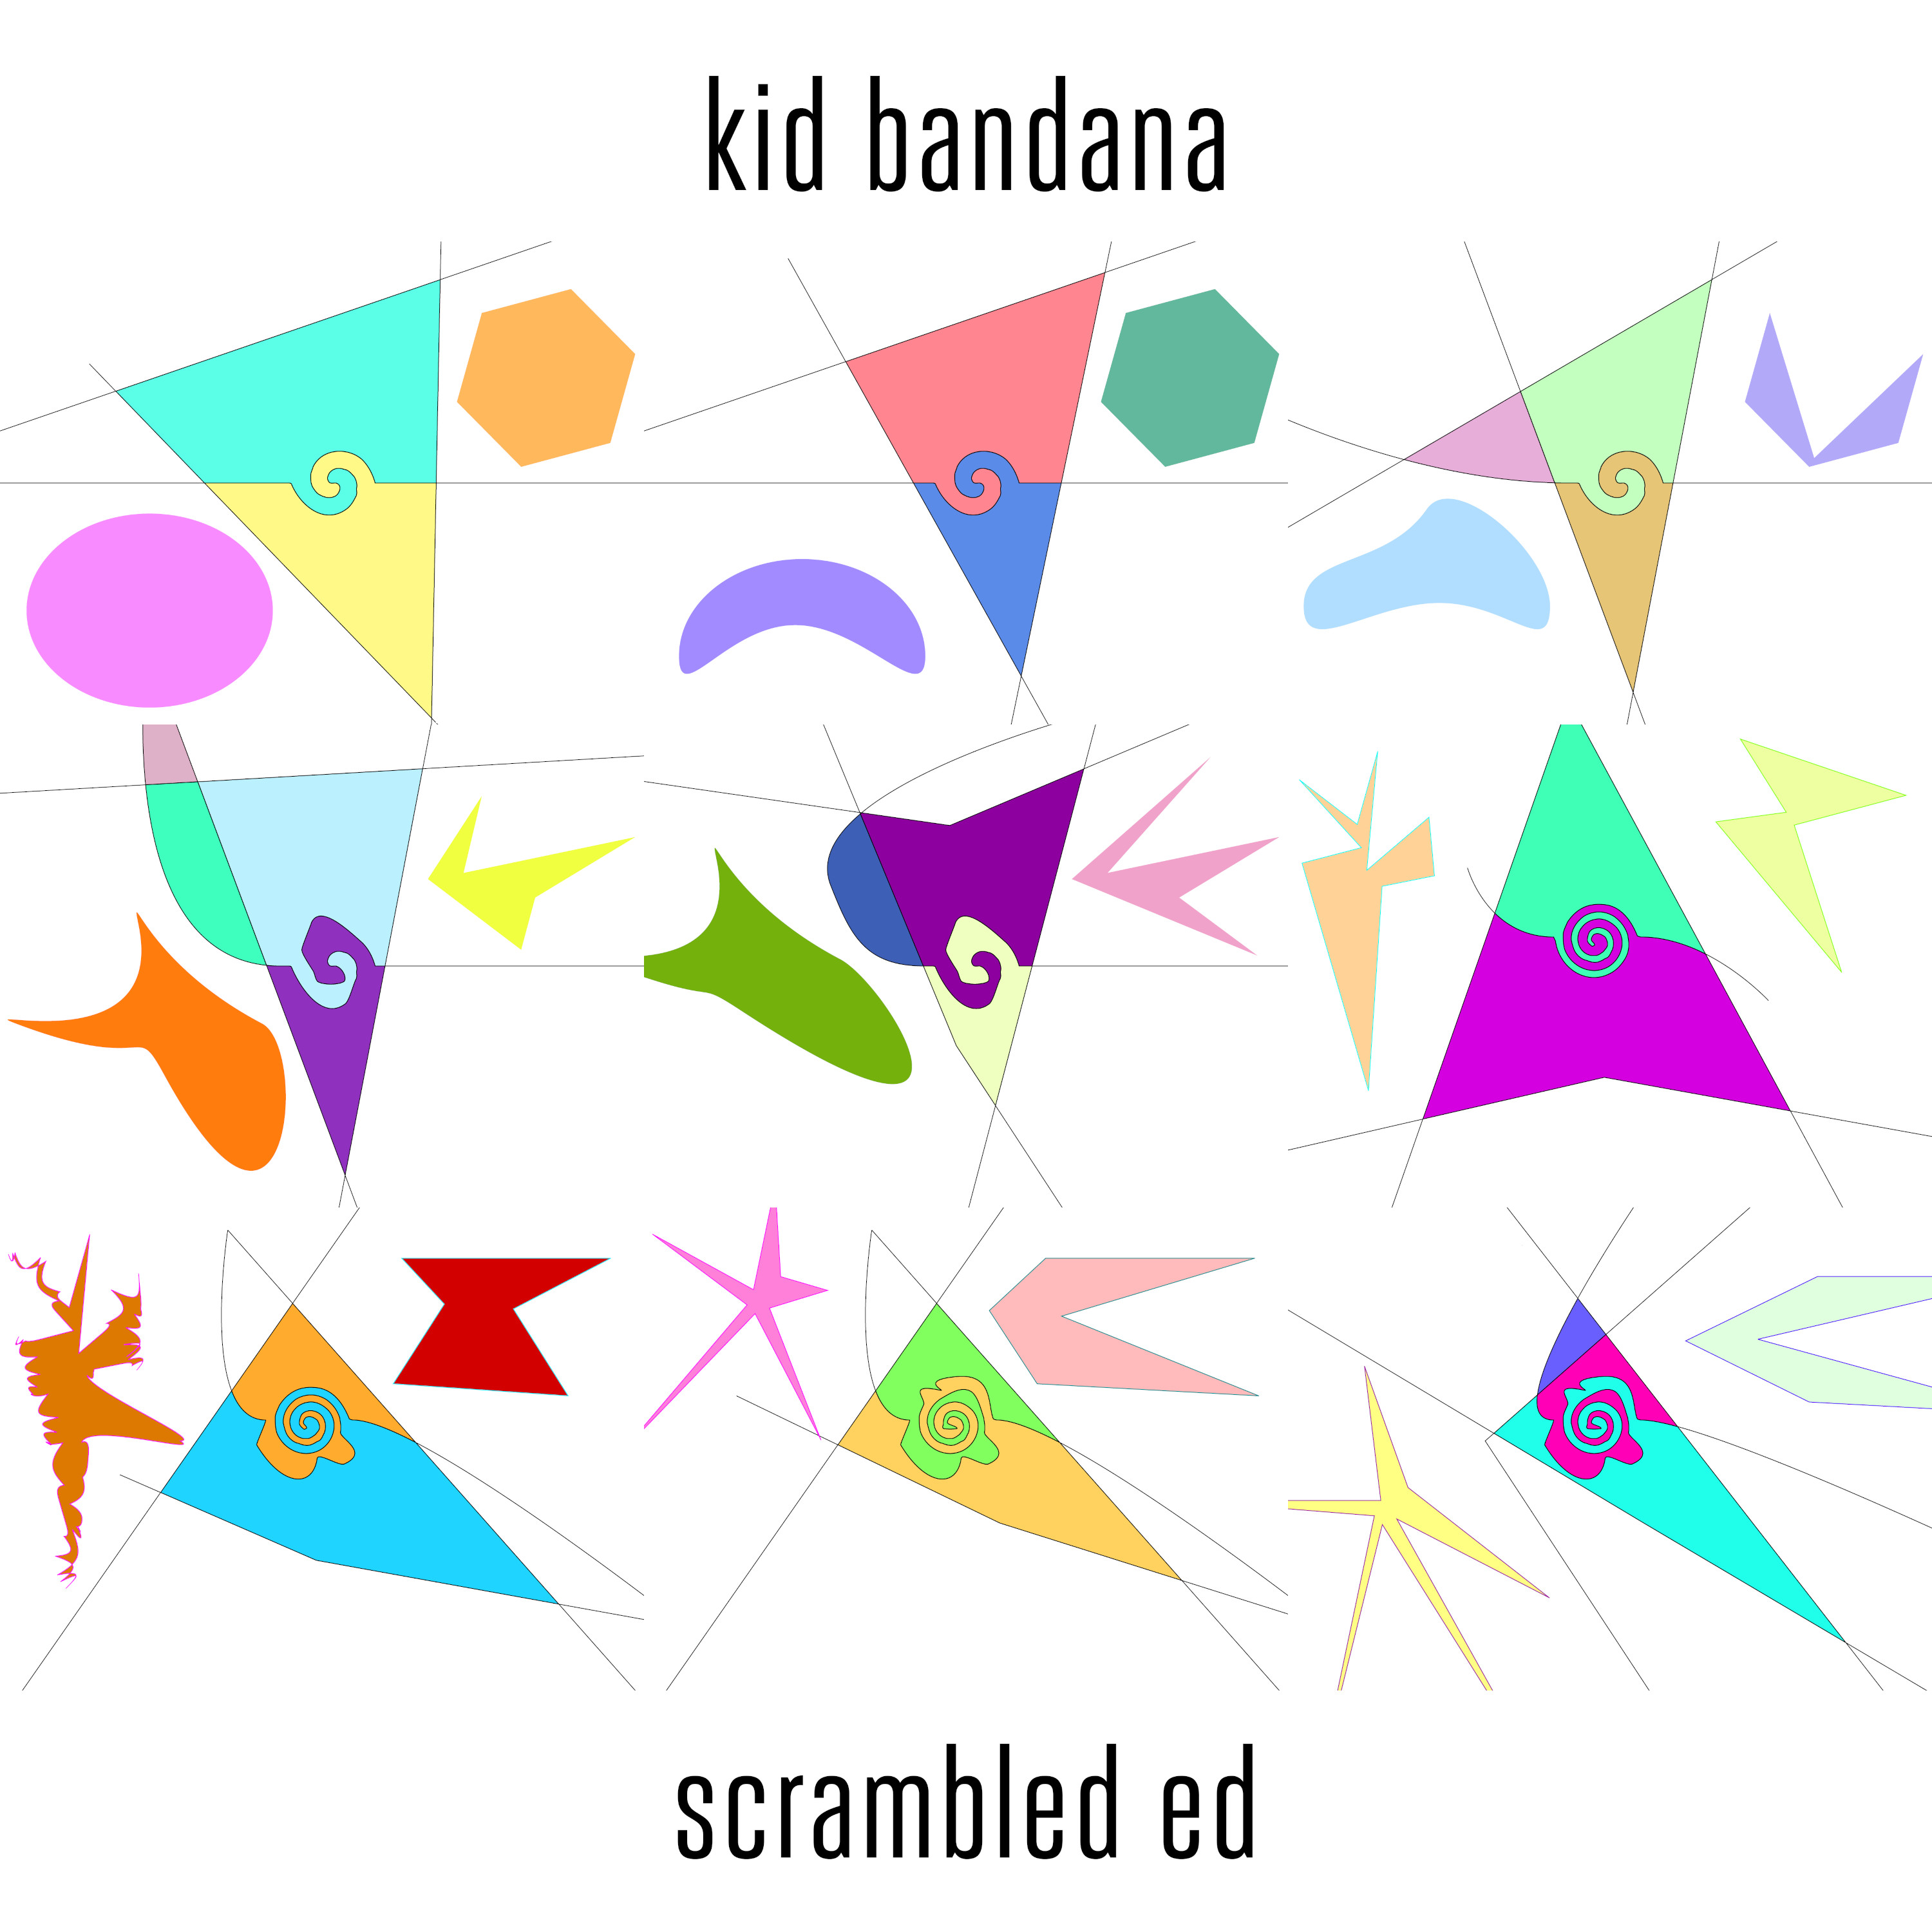 Scrambled Ed